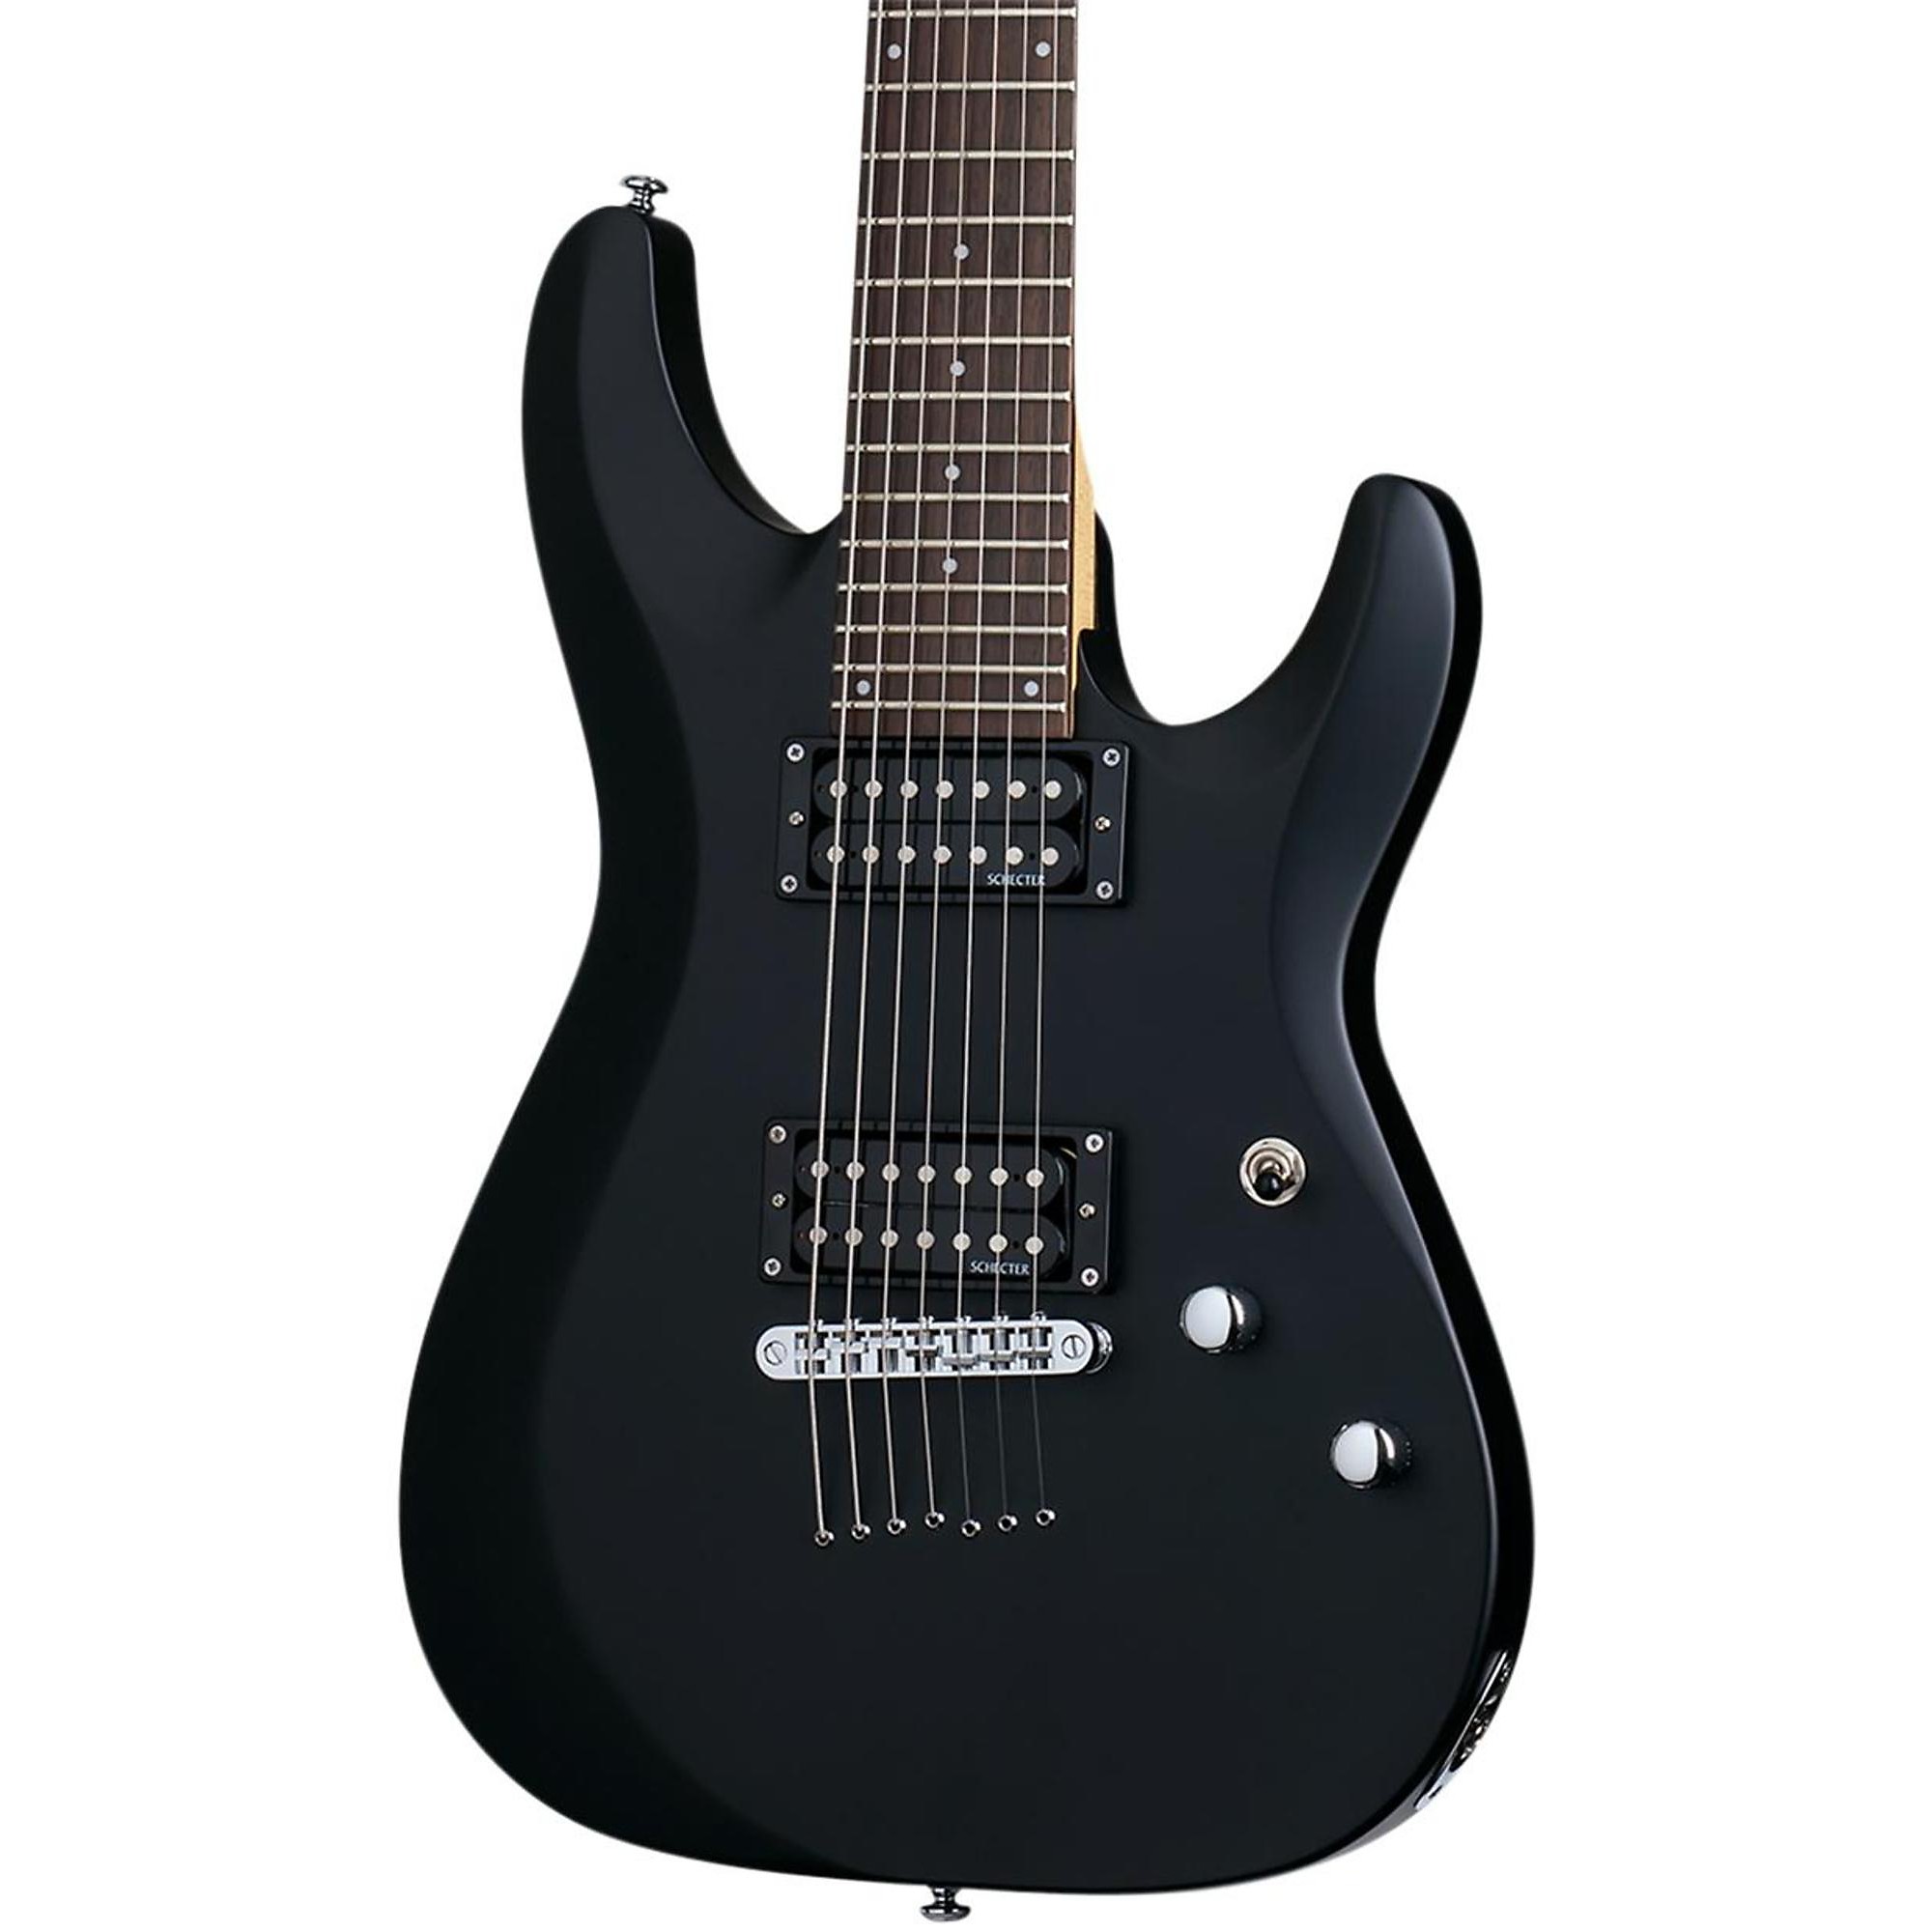 Schecter Guitar Research C-7 Deluxe Семиструнная электрогитара Satin Black цена и фото